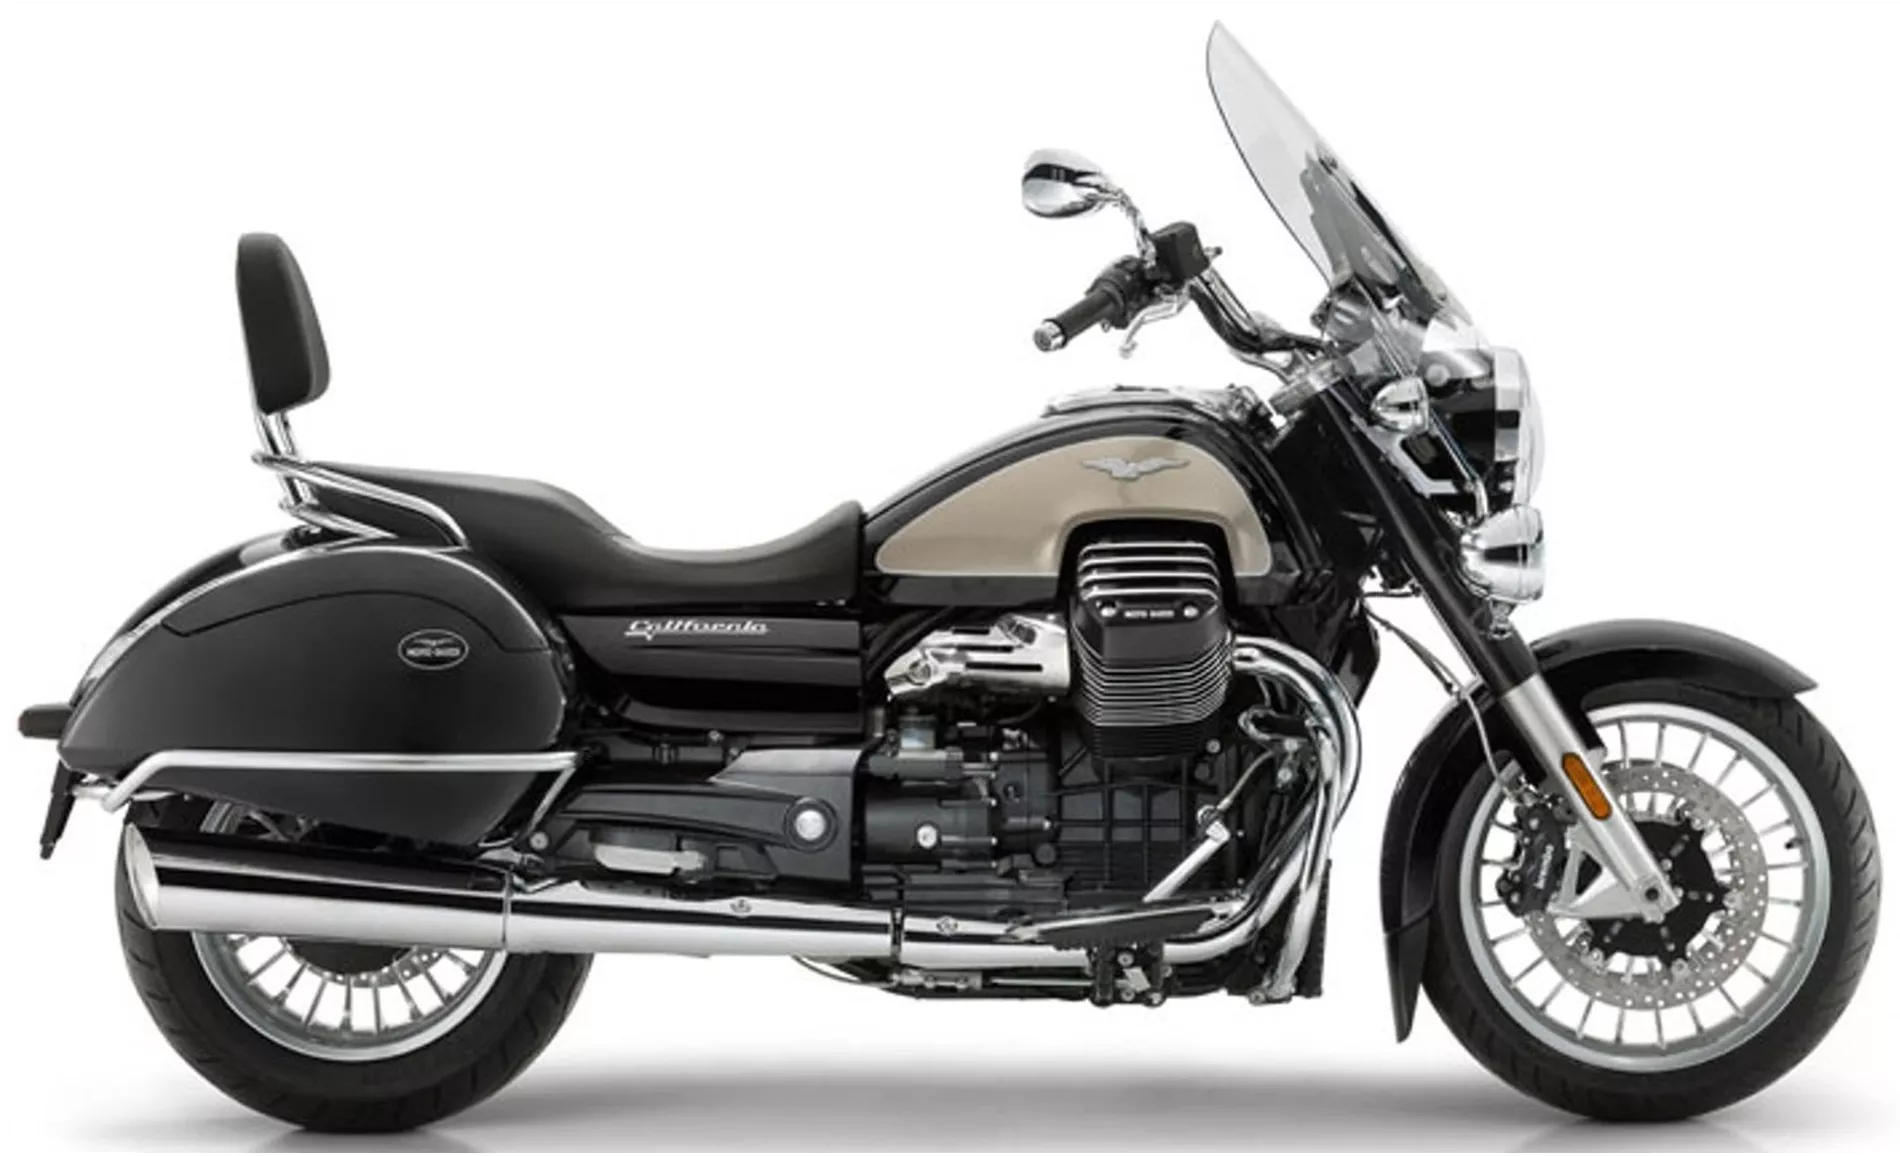 Moto Guzzi California 1400 Touring 2020